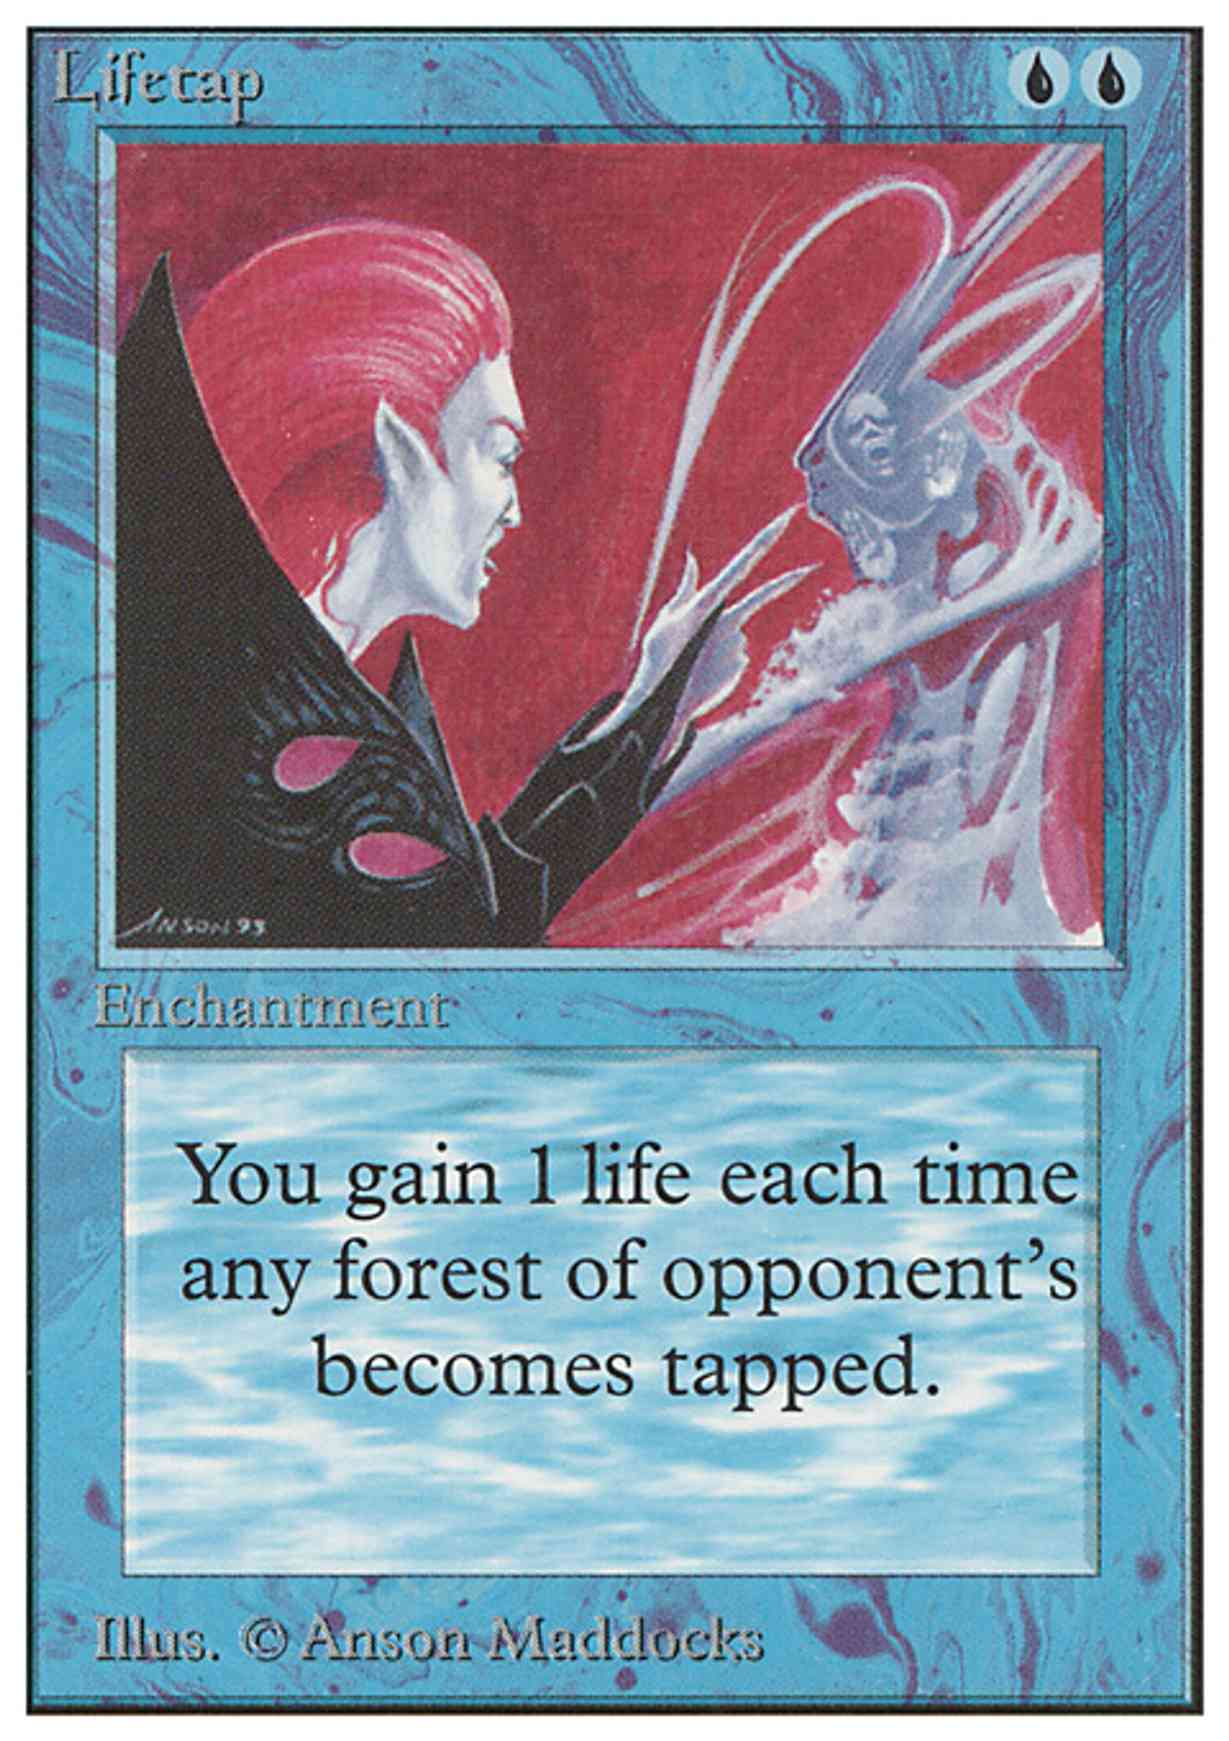 Lifetap magic card front